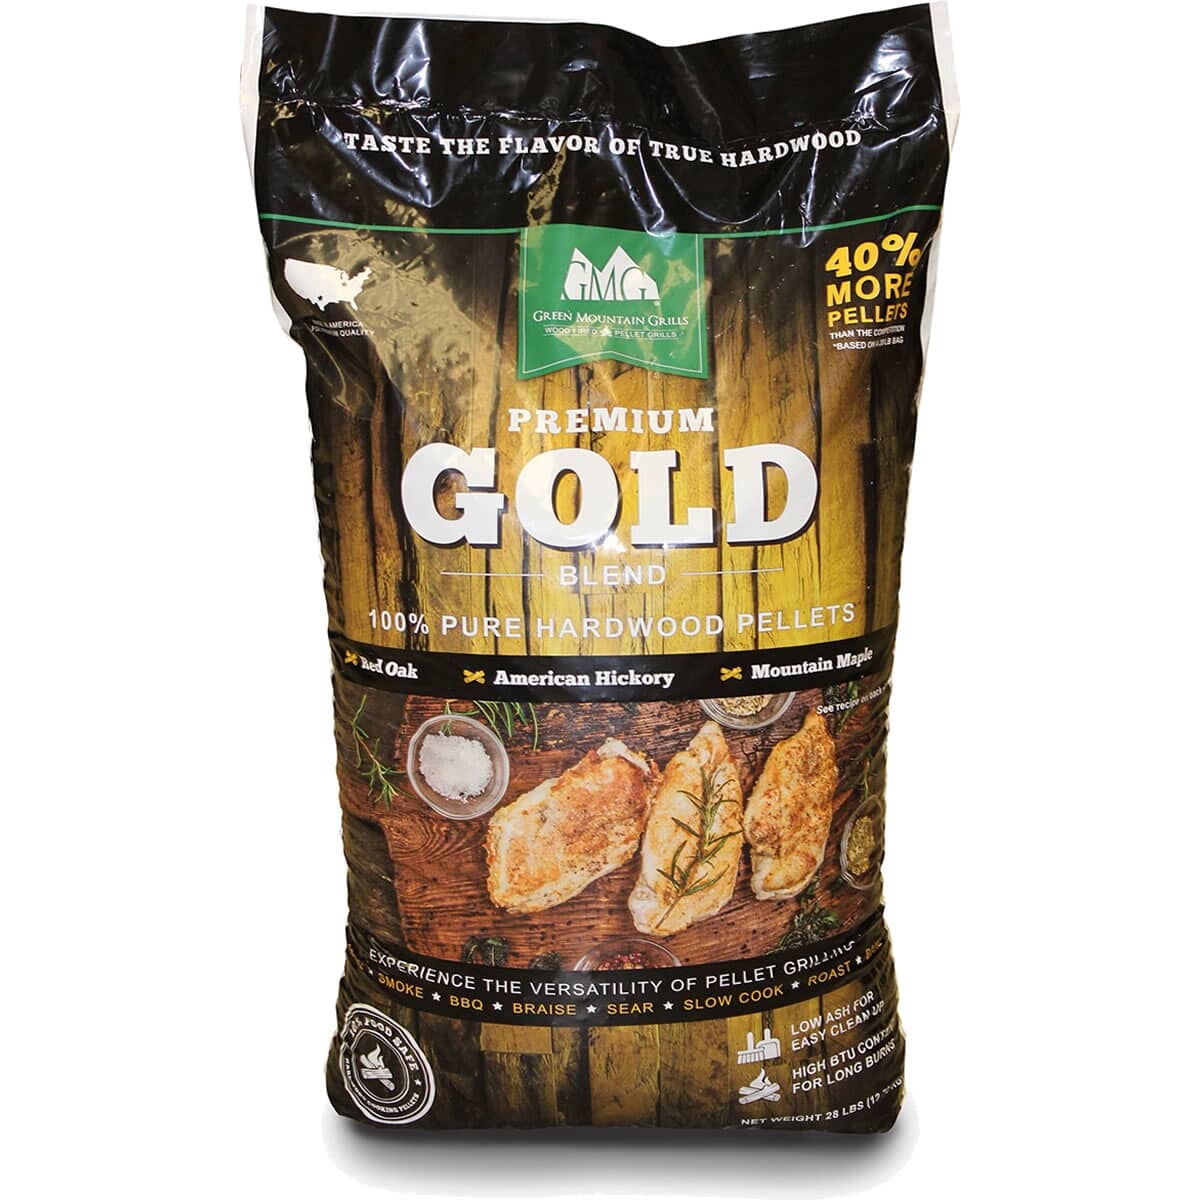 Green Mountain Grills Premium Pellets 12kg Bag - Gold Blend 